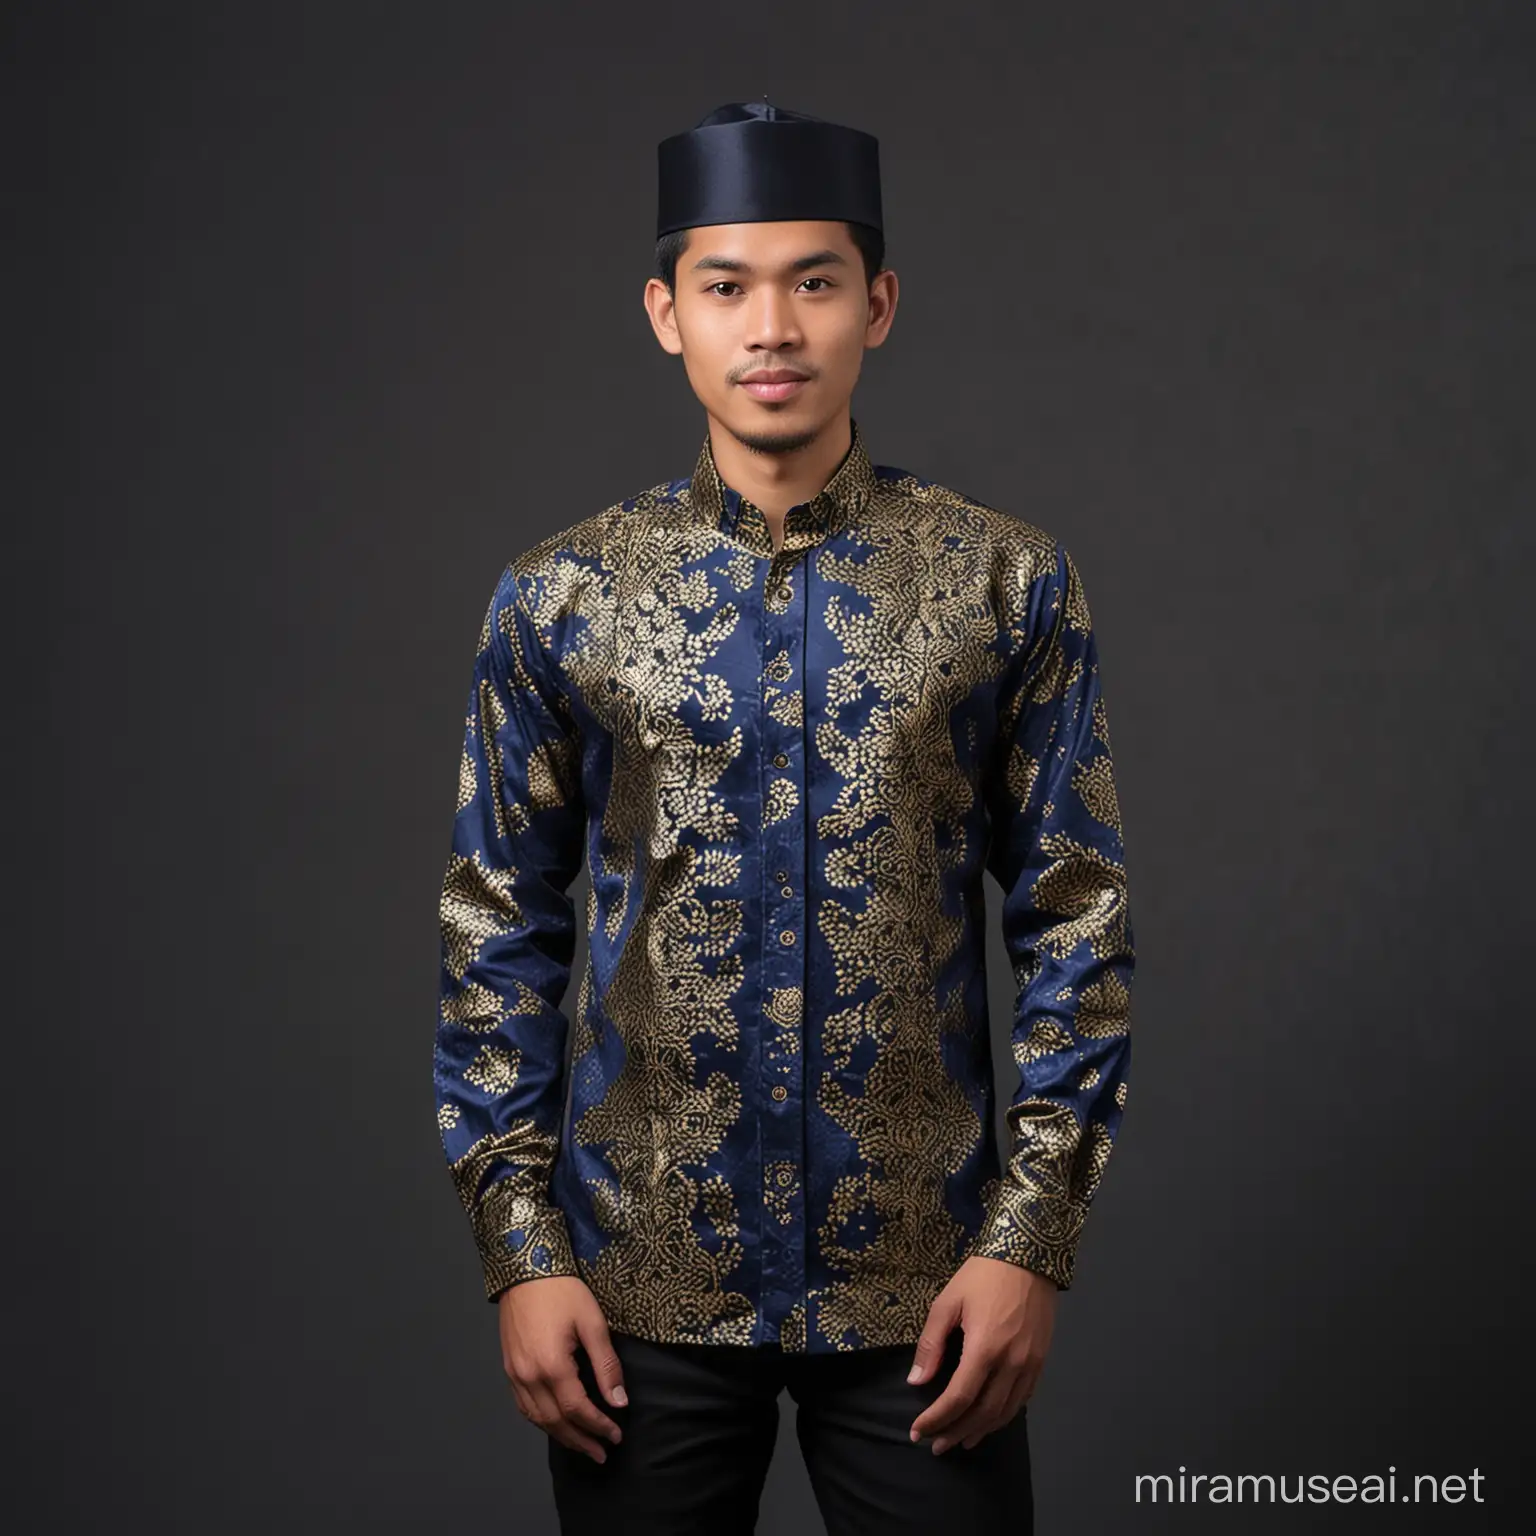 Indonesian Man in Elegant Navy Blue Batik Shirt and Songkok on Black Studio Background